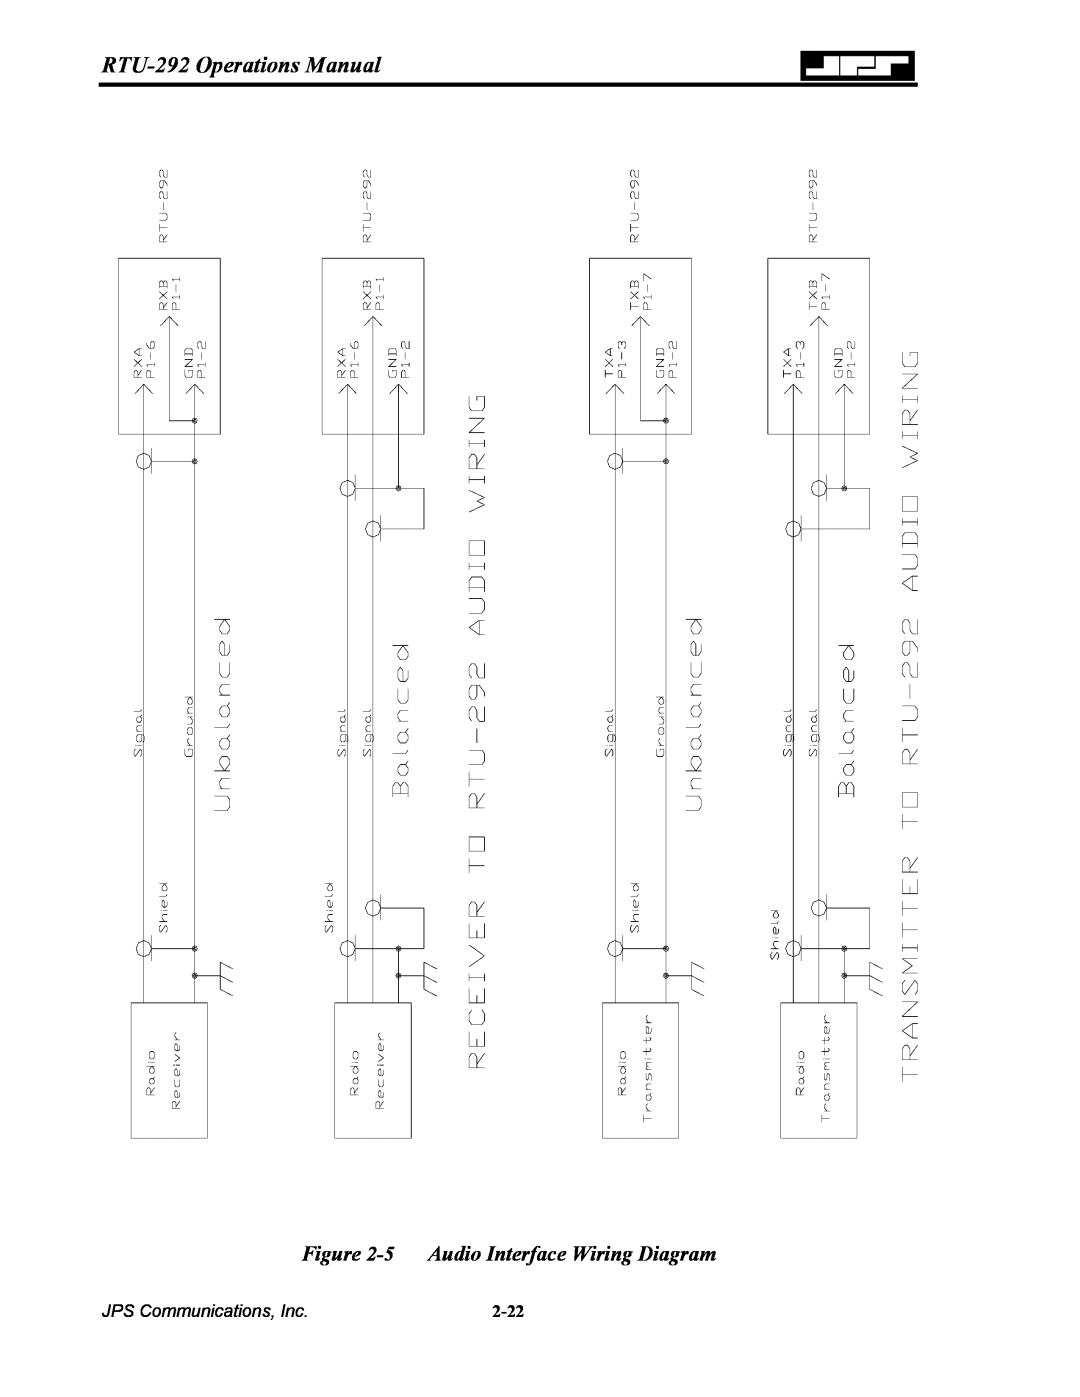 Nortel Networks RTU-292 Operations Manual, 5 Audio Interface Wiring Diagram, JPS Communications, Inc, 2-22 